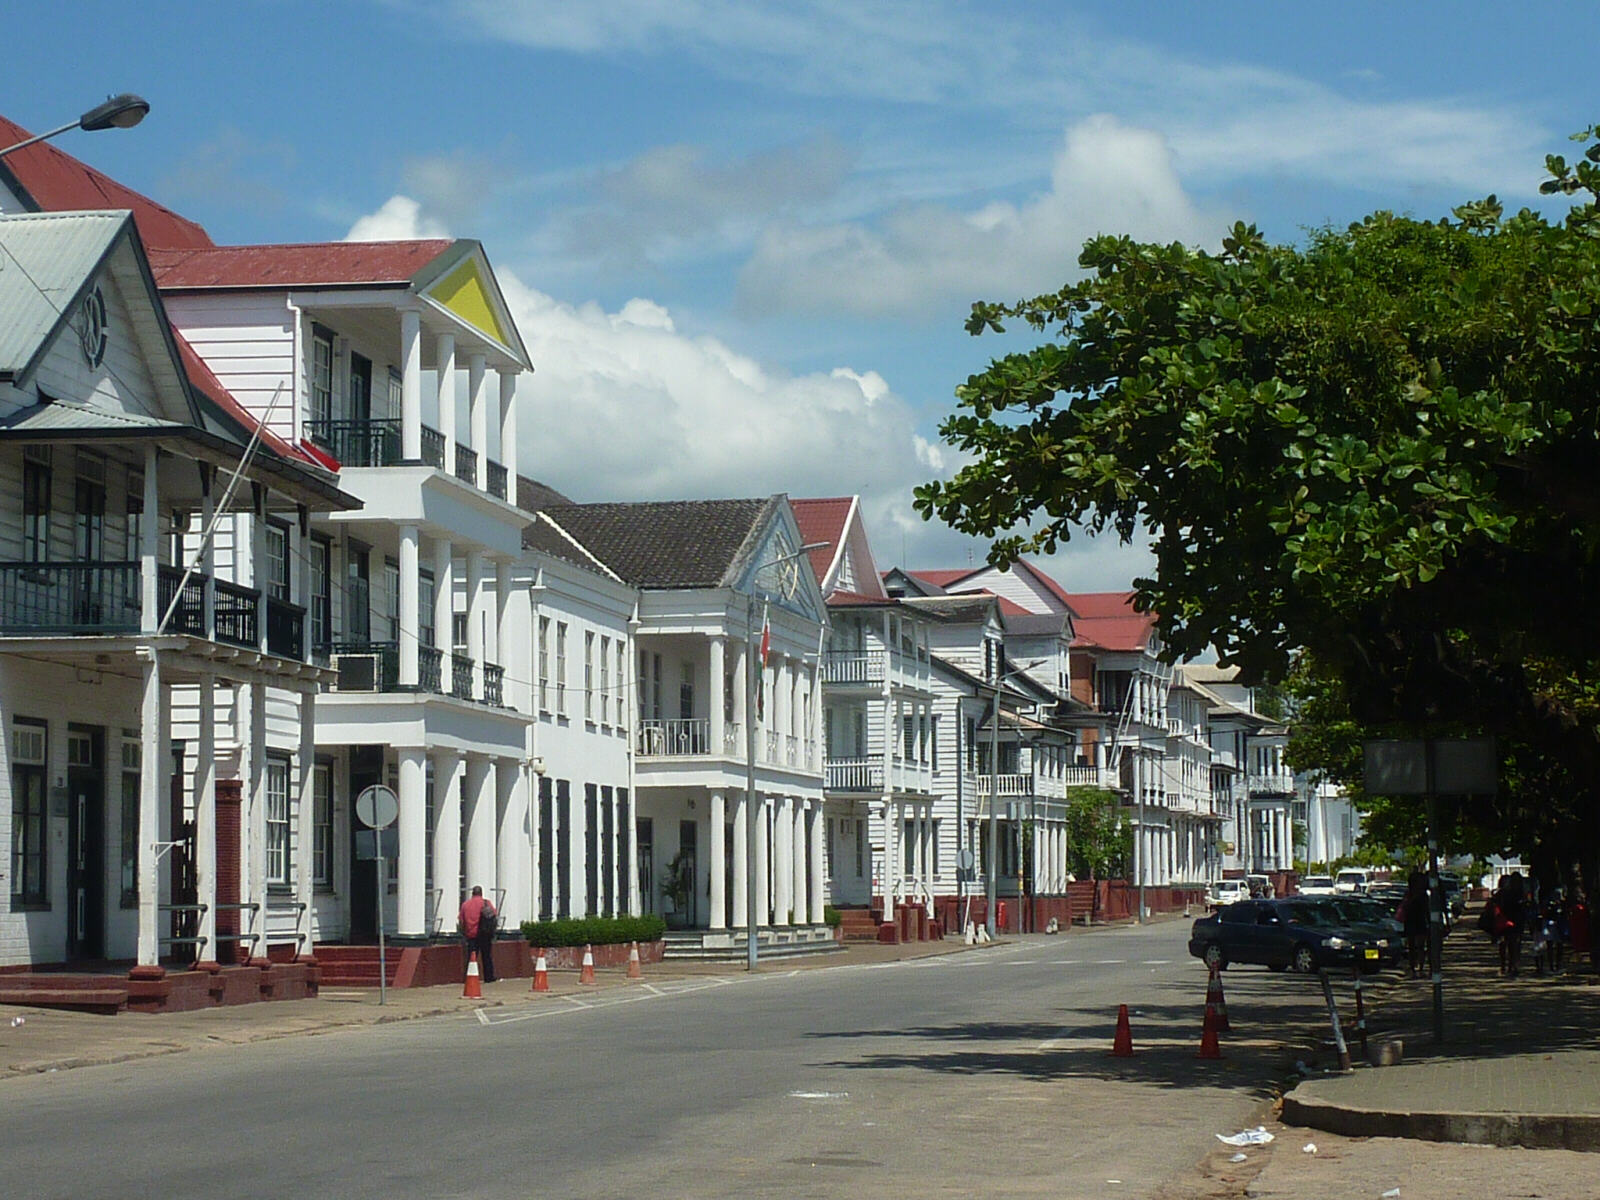 Waterkant, the riverfront road in Paramaribo, Suriname